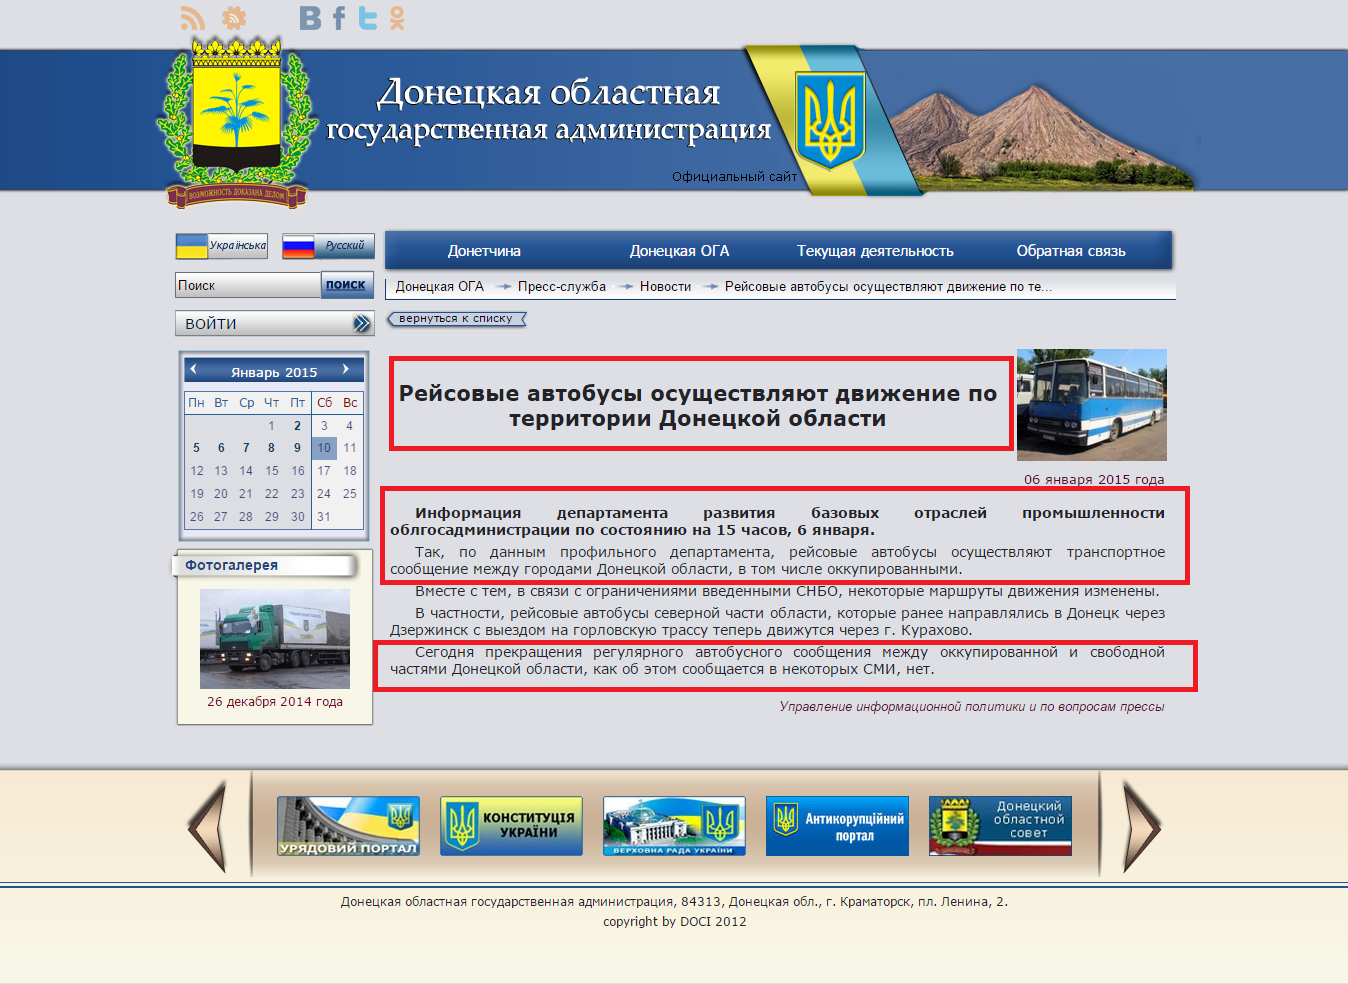 http://donoda.gov.ua/?lang=ru&sec=02.03.09&iface=Public&cmd=view&args=id:23127